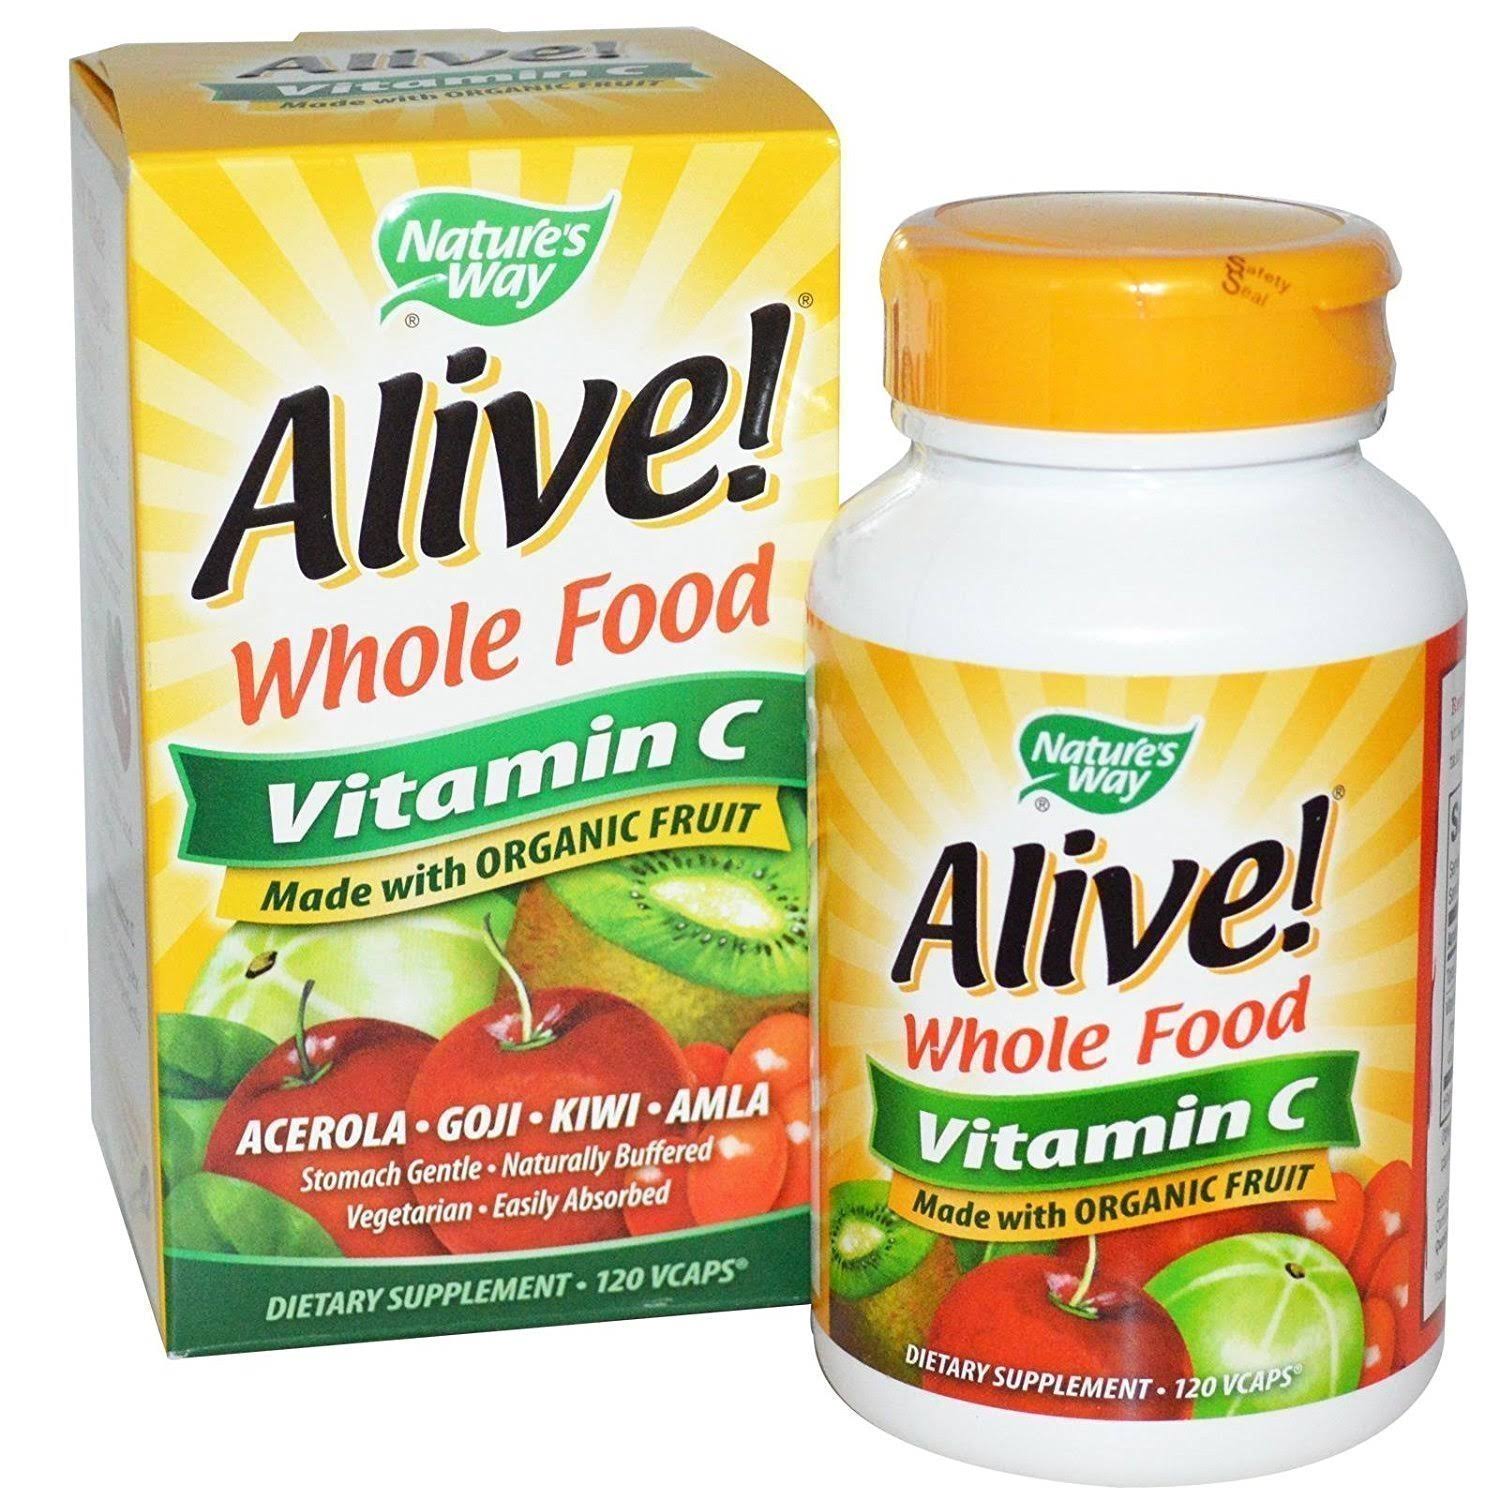 Nature's Way Alive 100% Whole Food Complex Vitamin C - 500mg, 120 Capsules